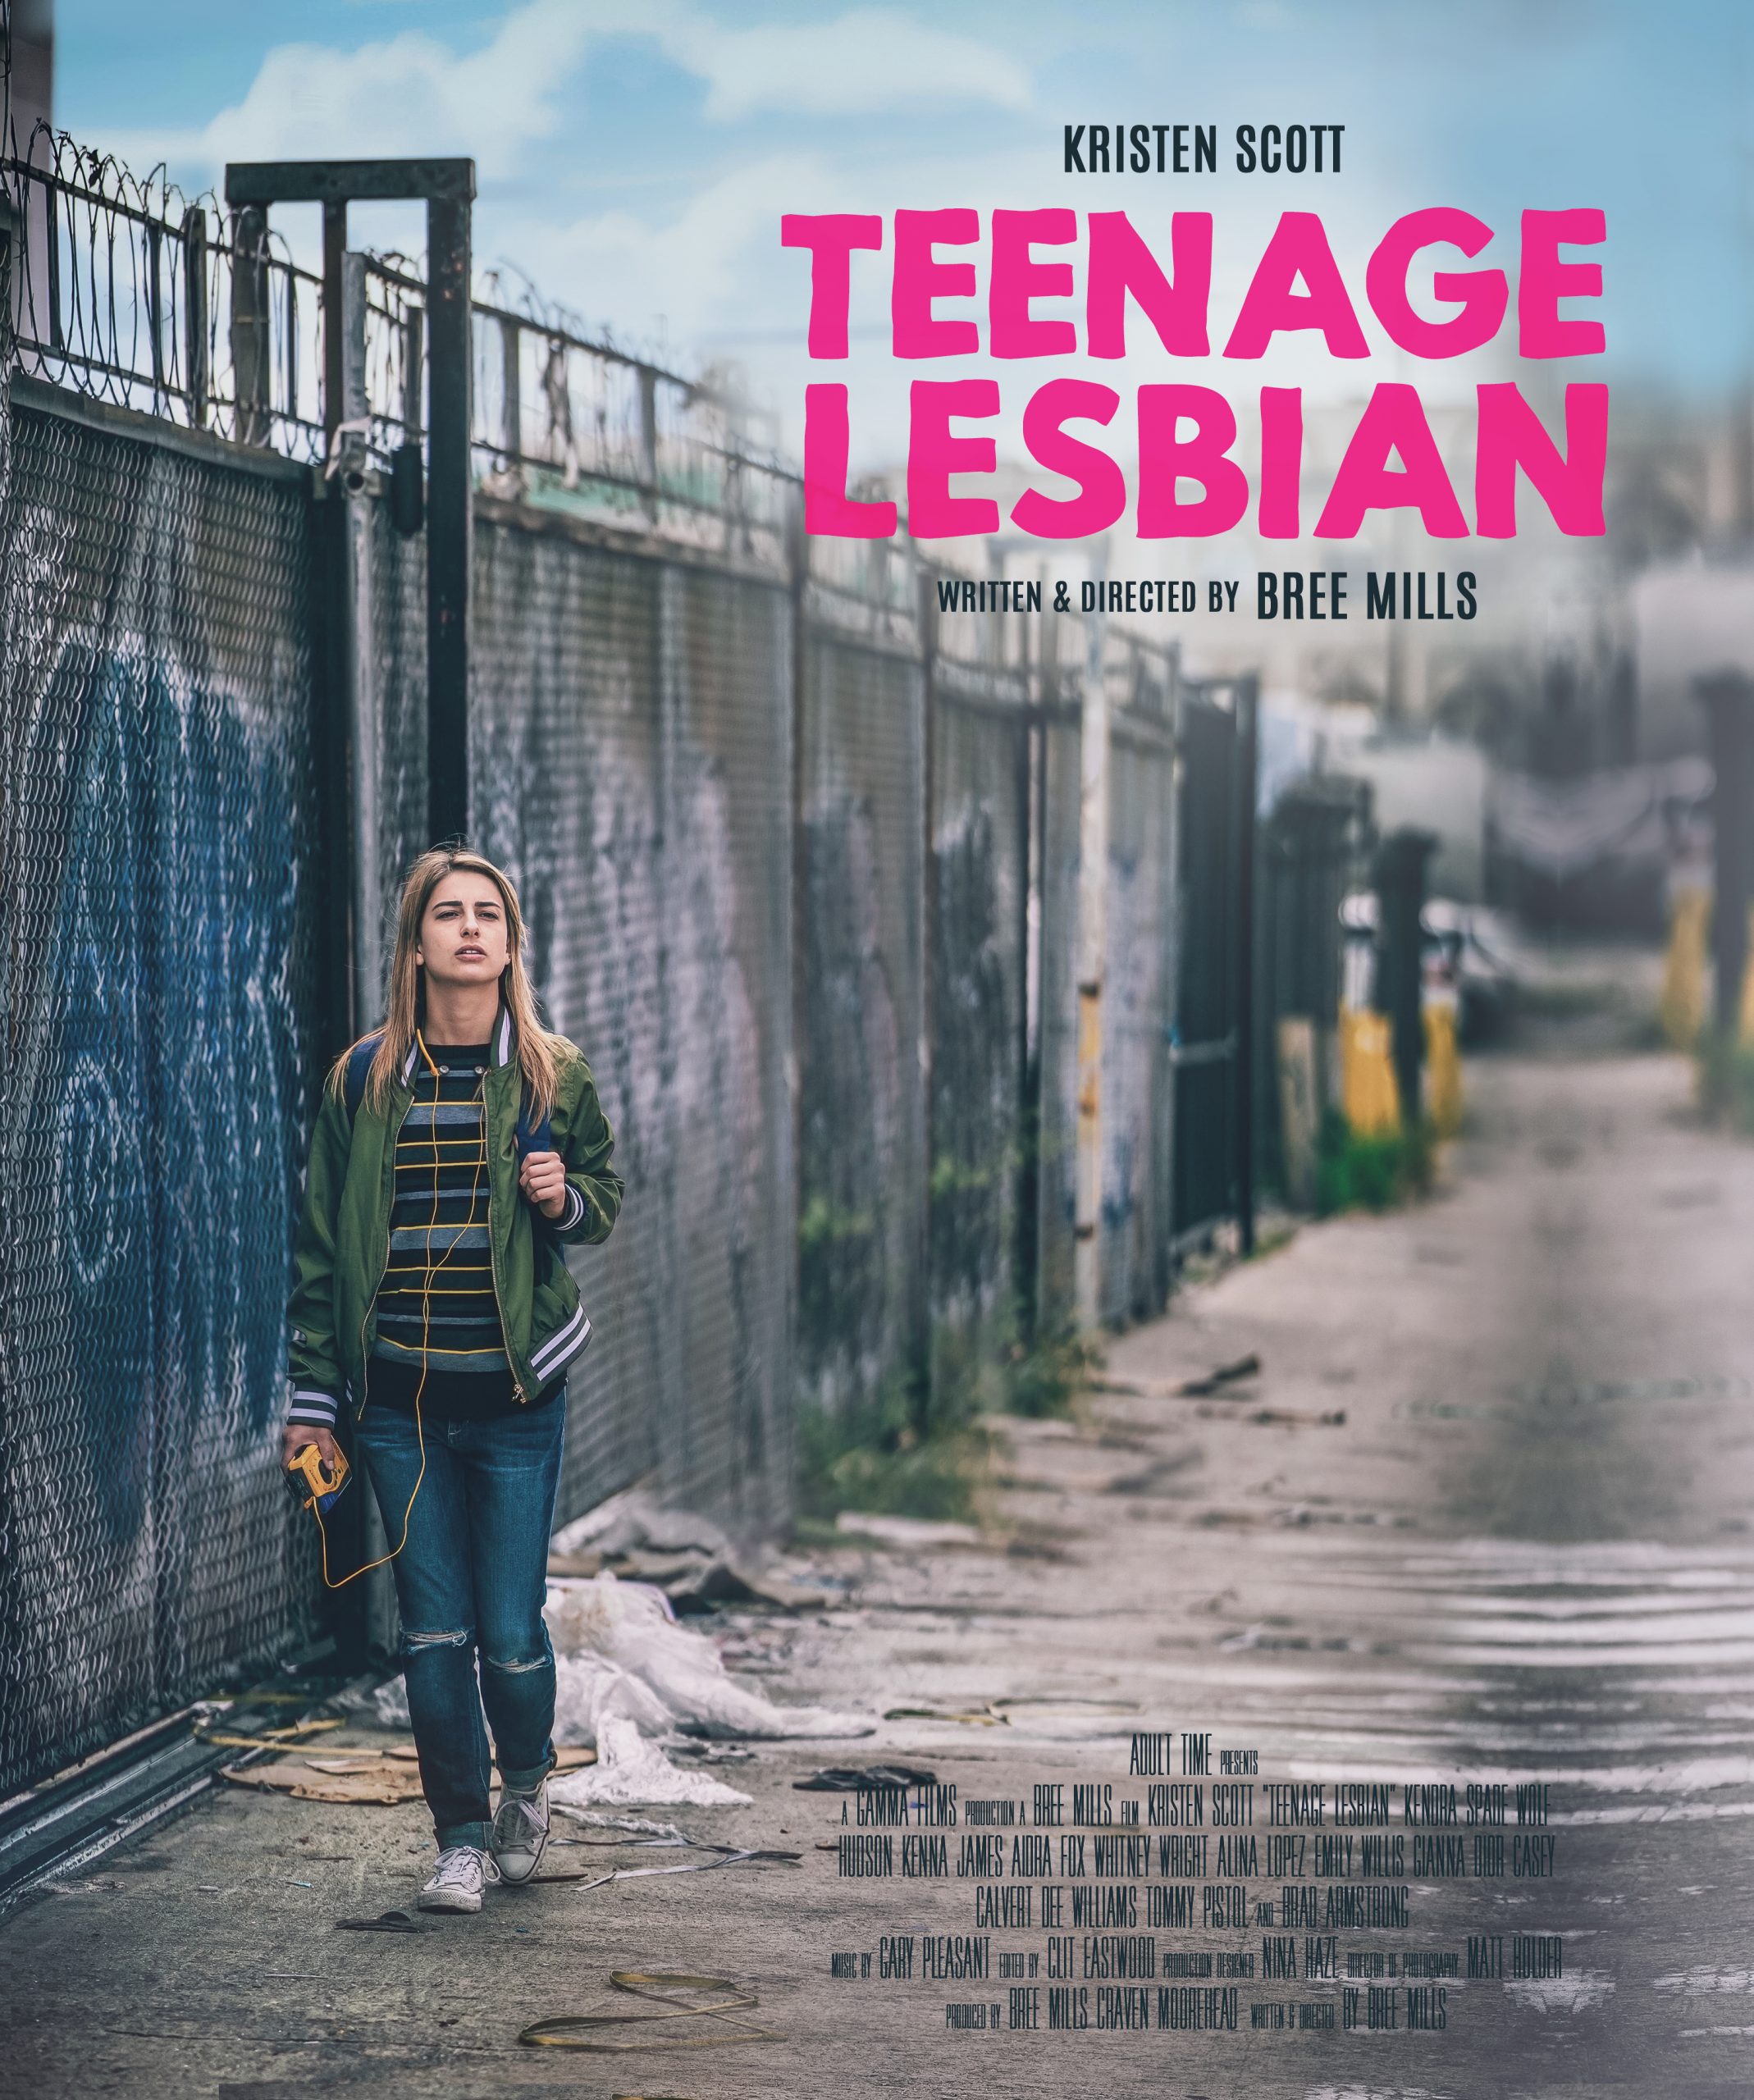 Teenage lesbian